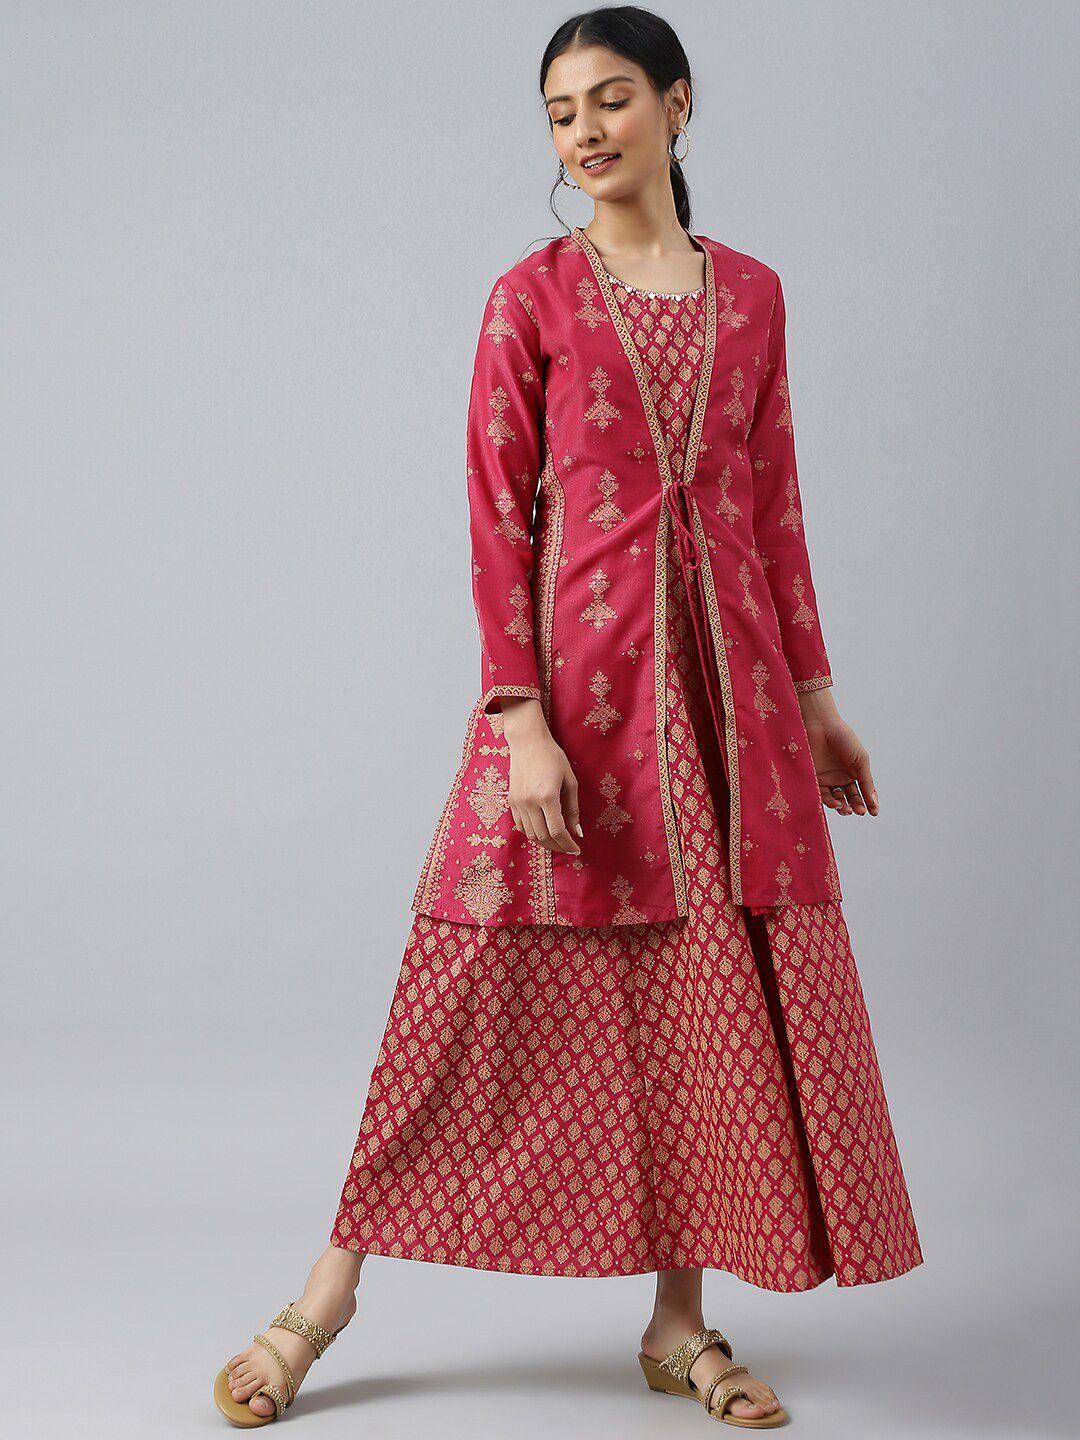 w pink ethnic motifs chiffon ethnic maxi dress with tie-up waist coat